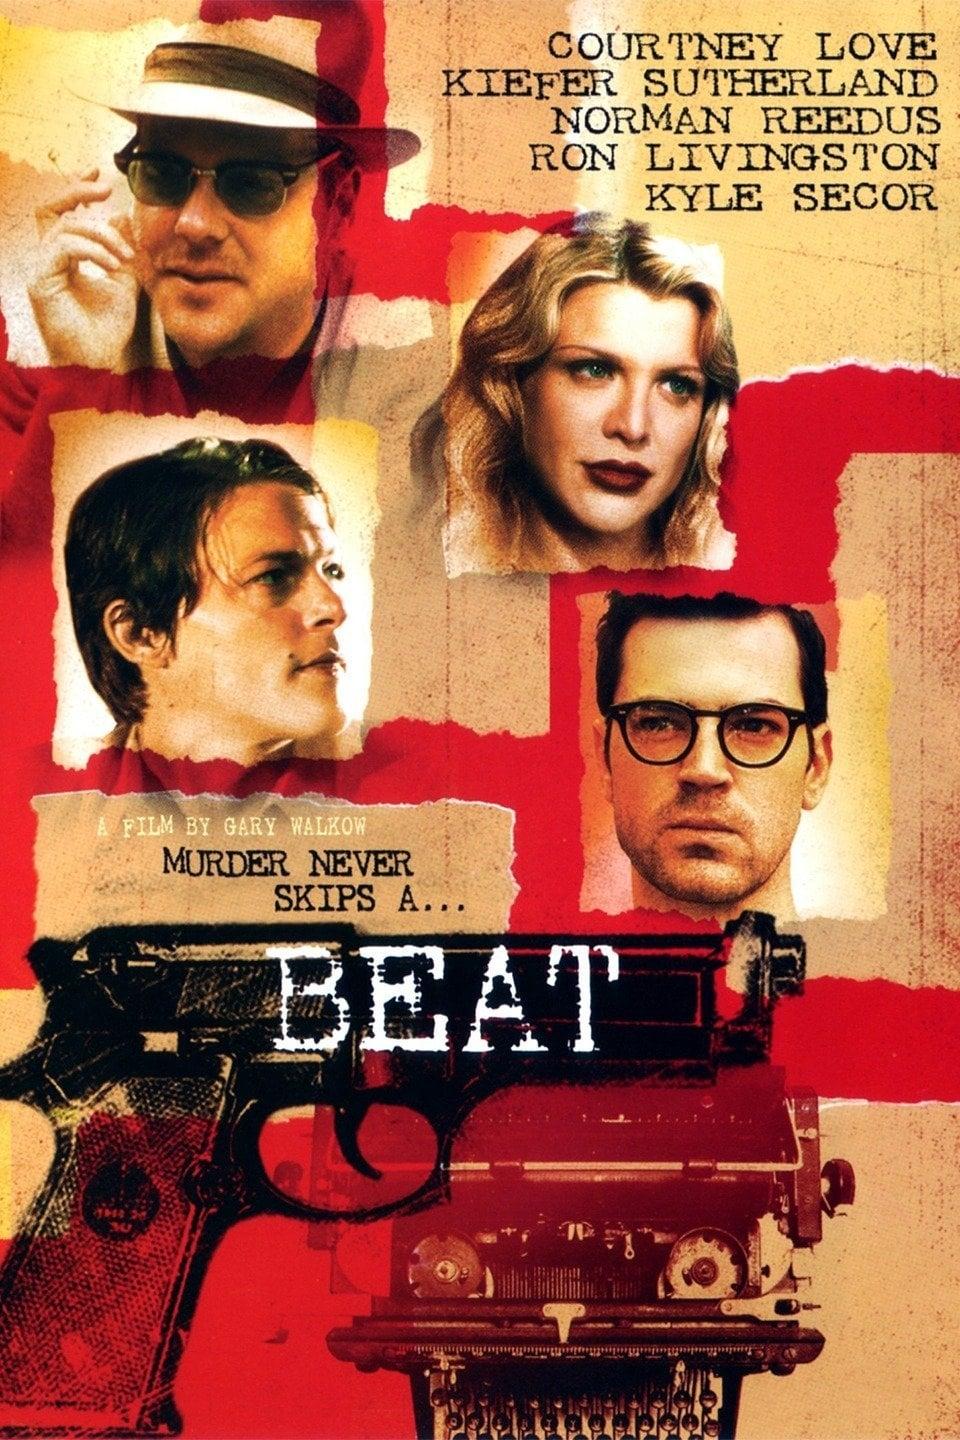 Beat poster